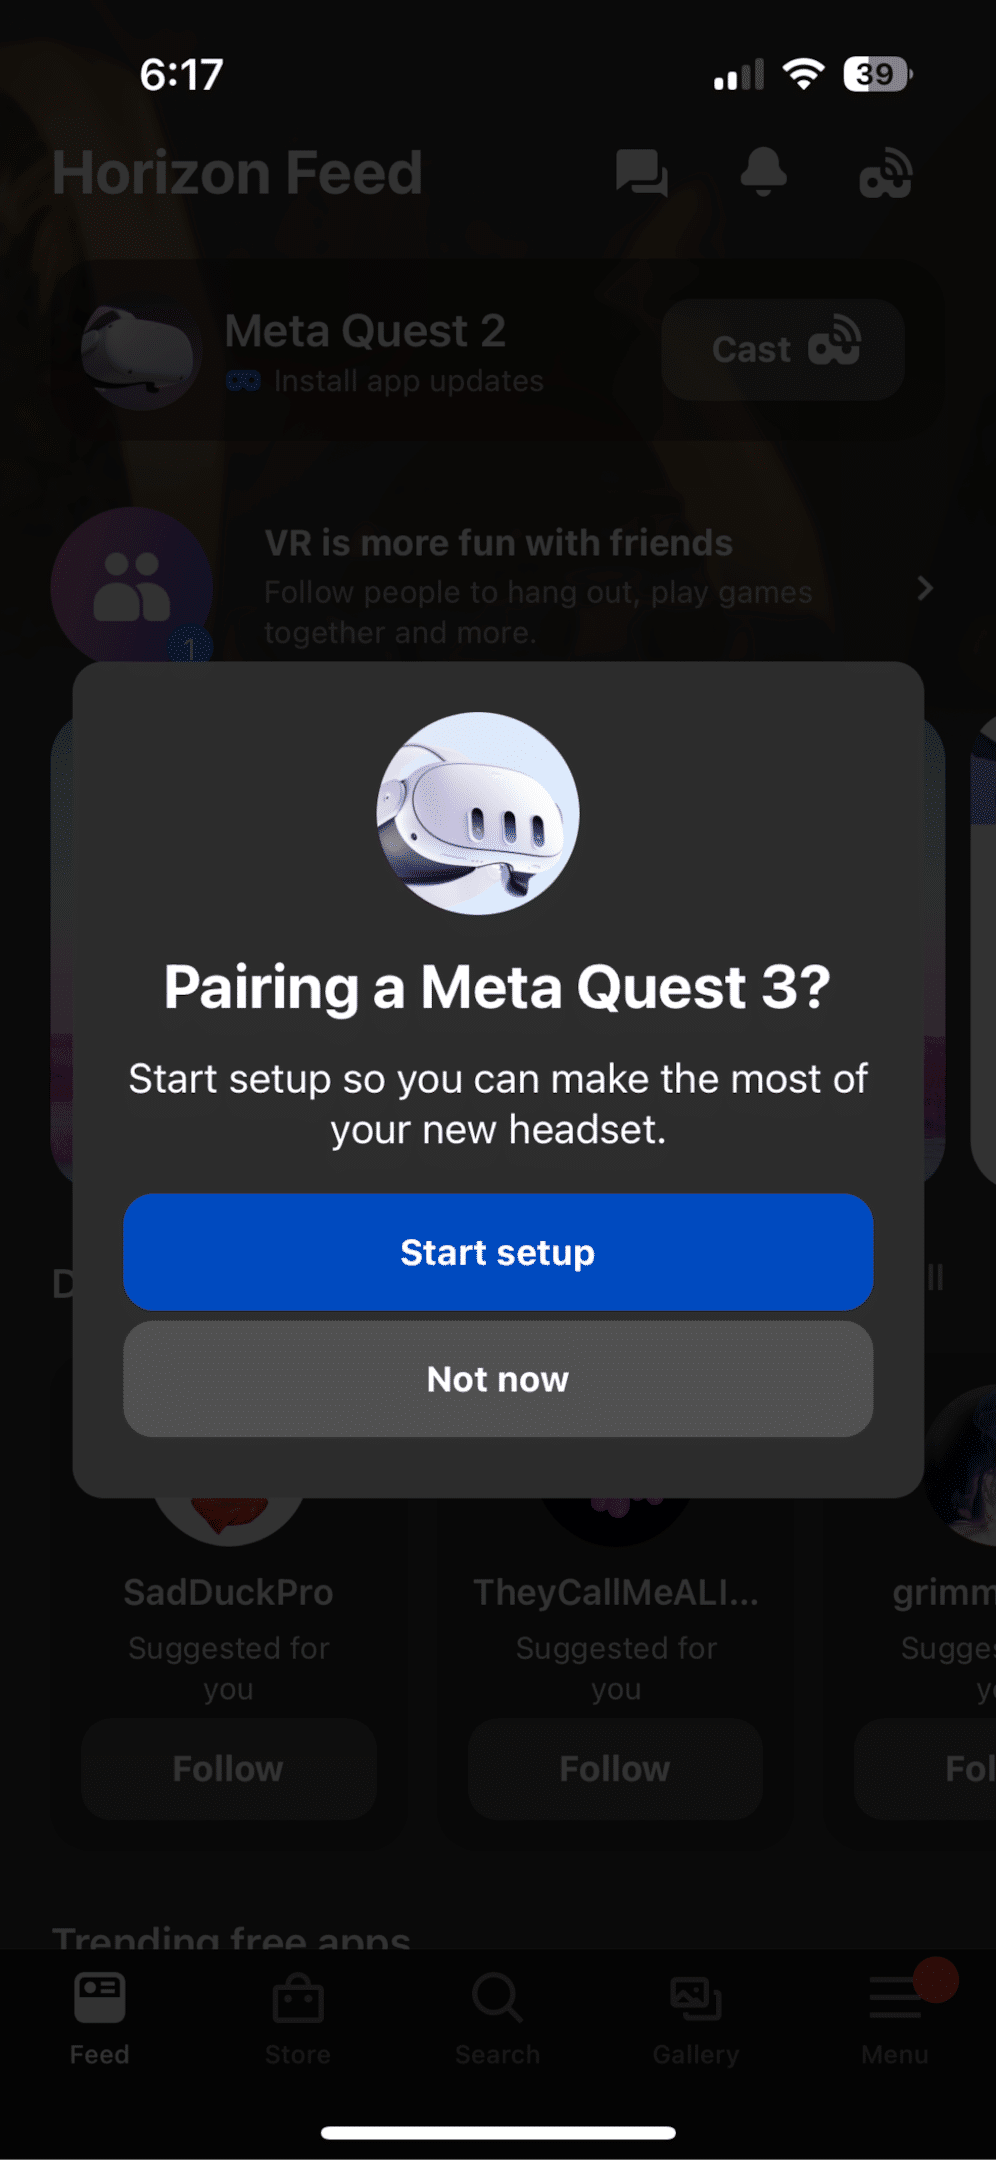 meta quest 3 start setup in mobile app